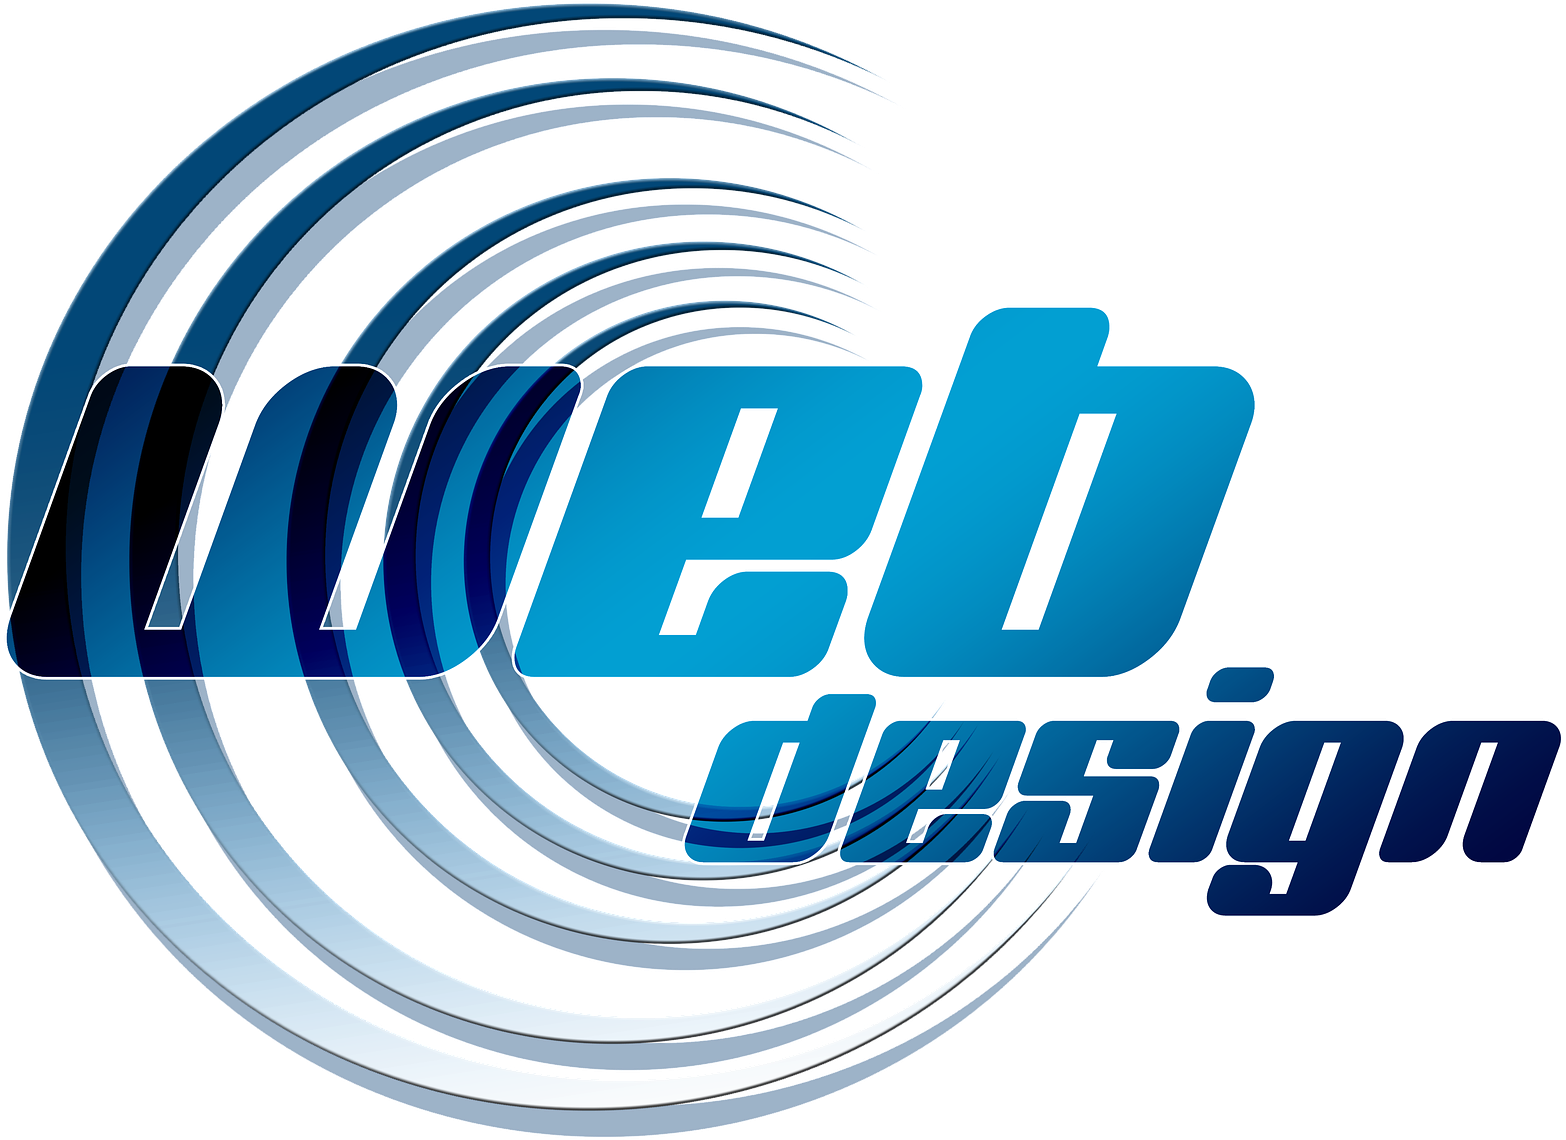 Web Design Manchester Call 07913 261 281 Rh Web Designers - Logo Hd Web Design (1920x1139)